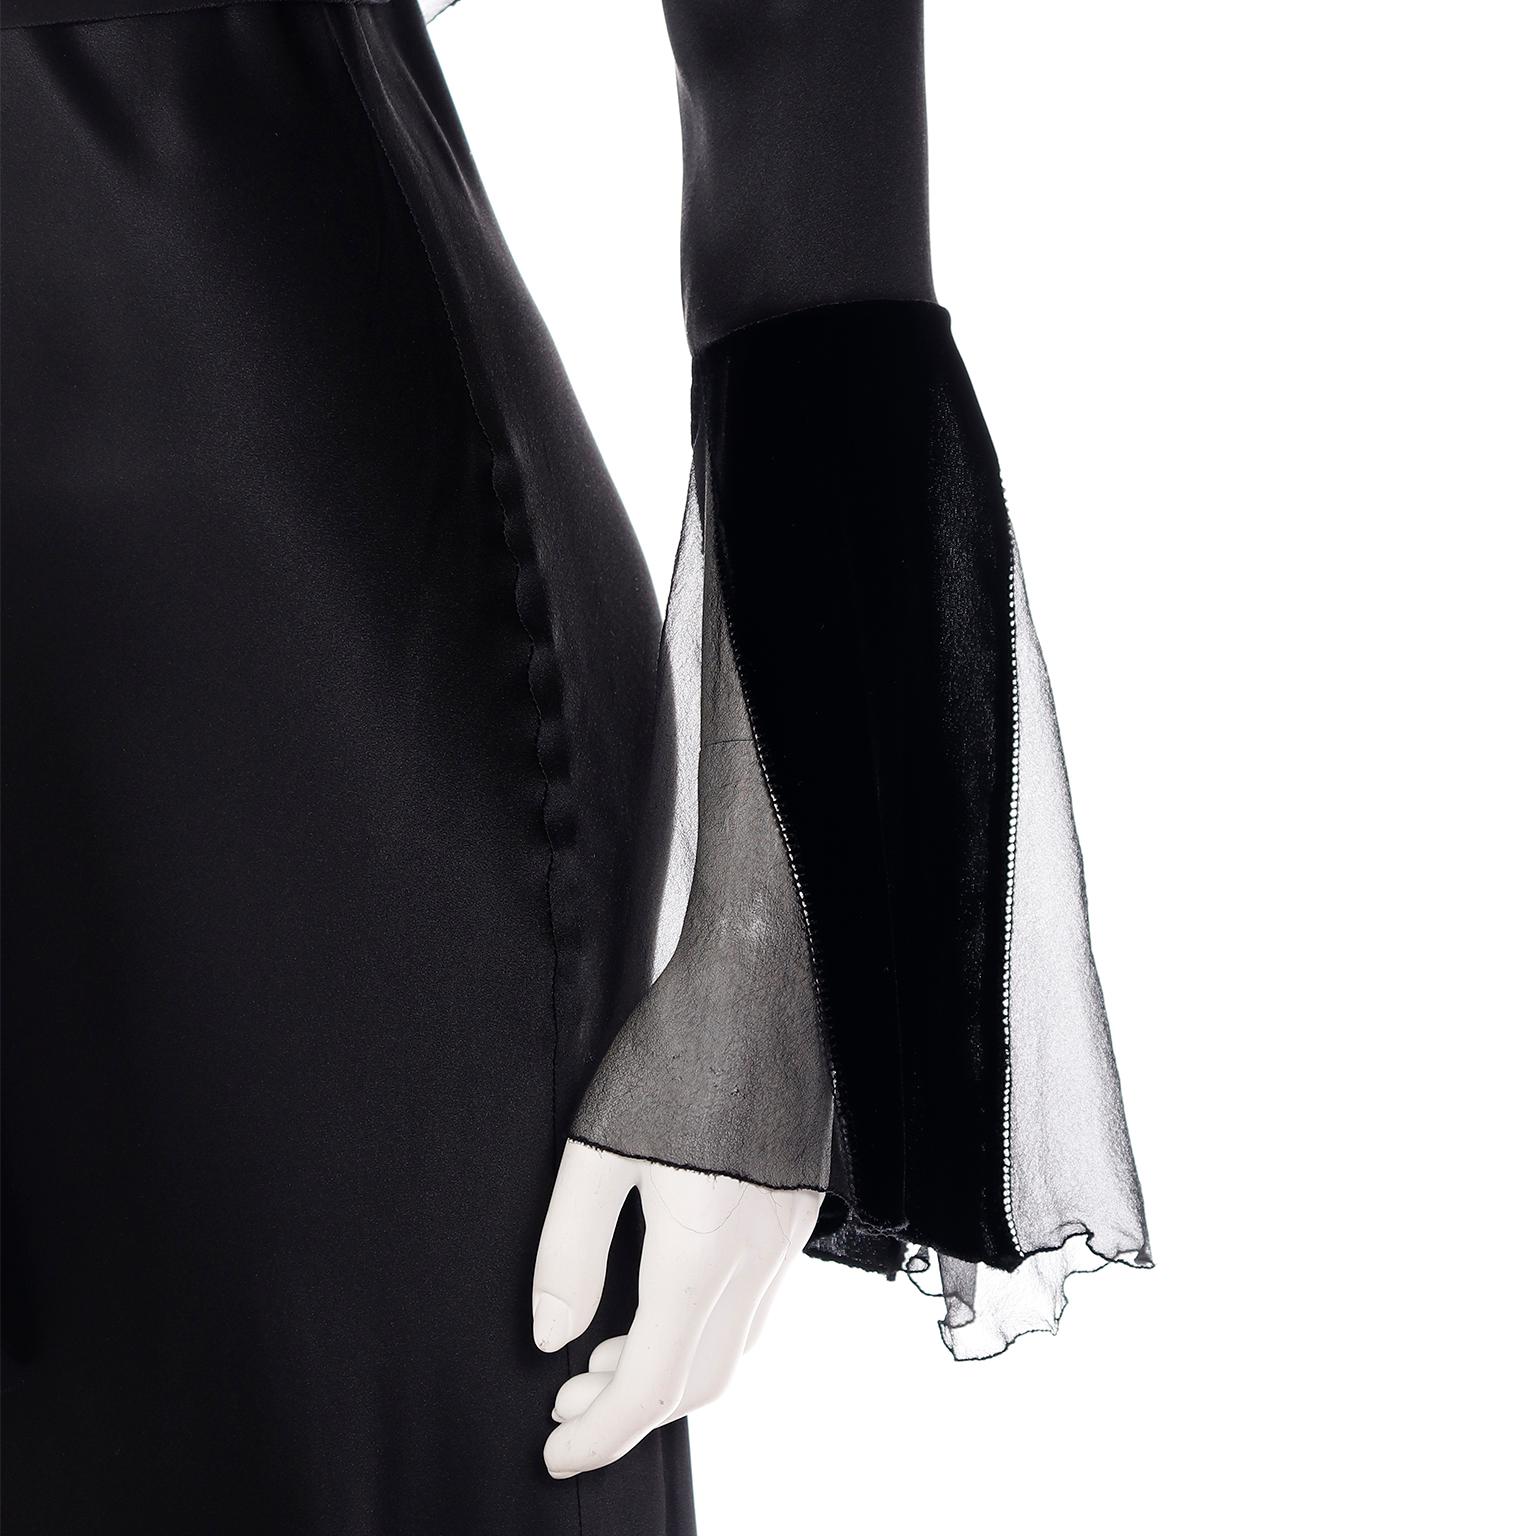 Alberta Ferretti 1990s Vintage Black Silk Evening Gown Dress W Statement Sleeves 7